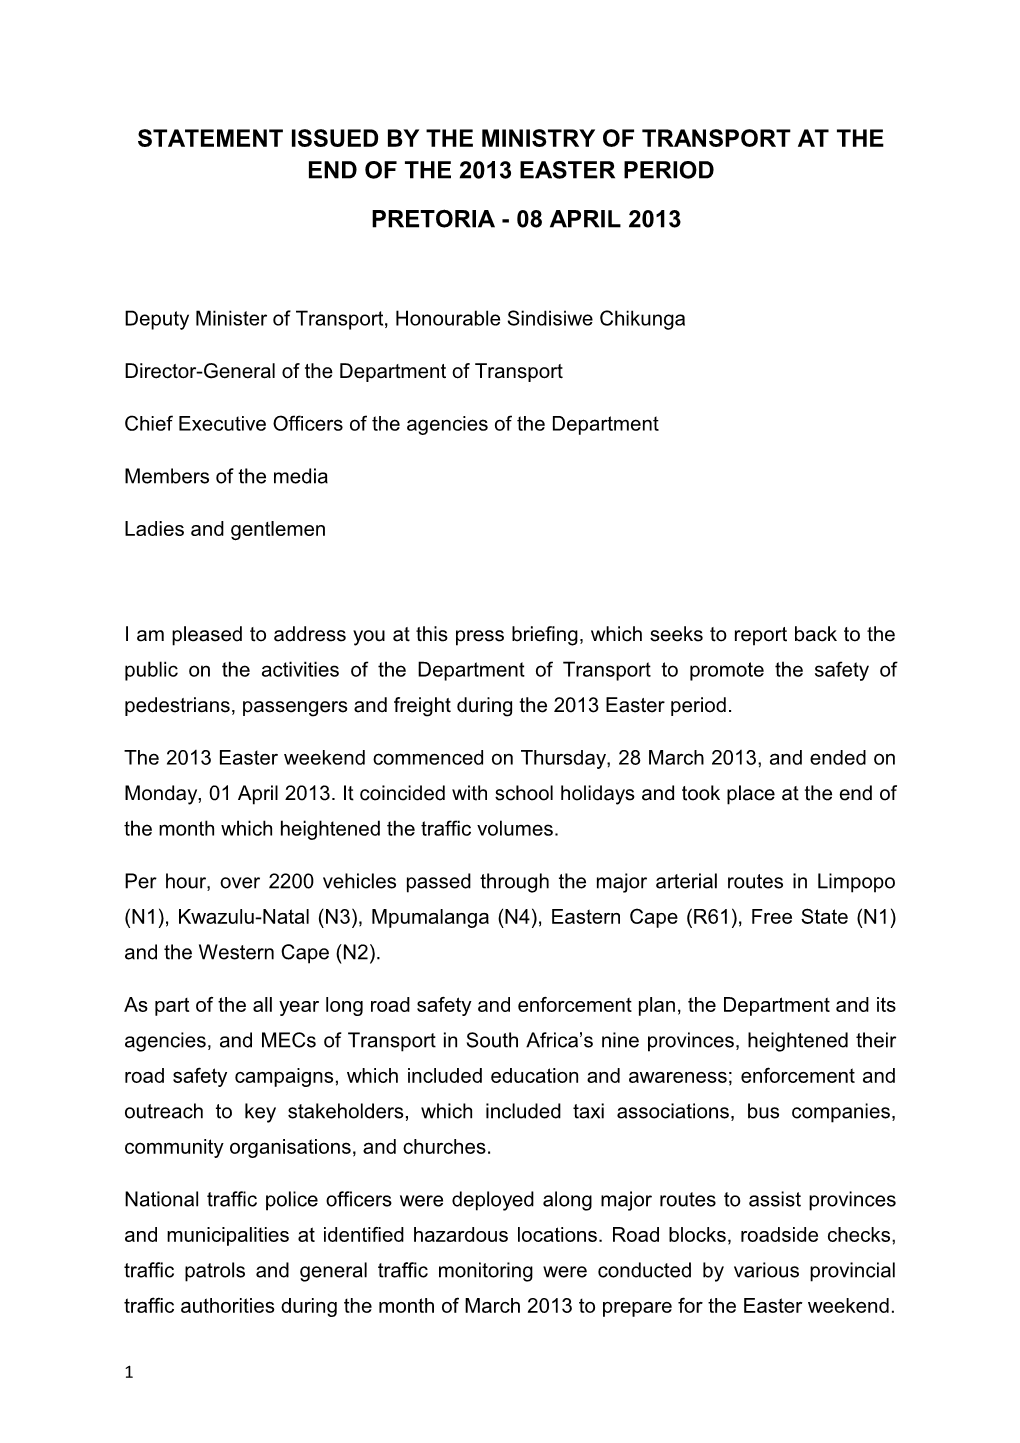 End of Easter Minister Statement 8 April 2013 Final Draft